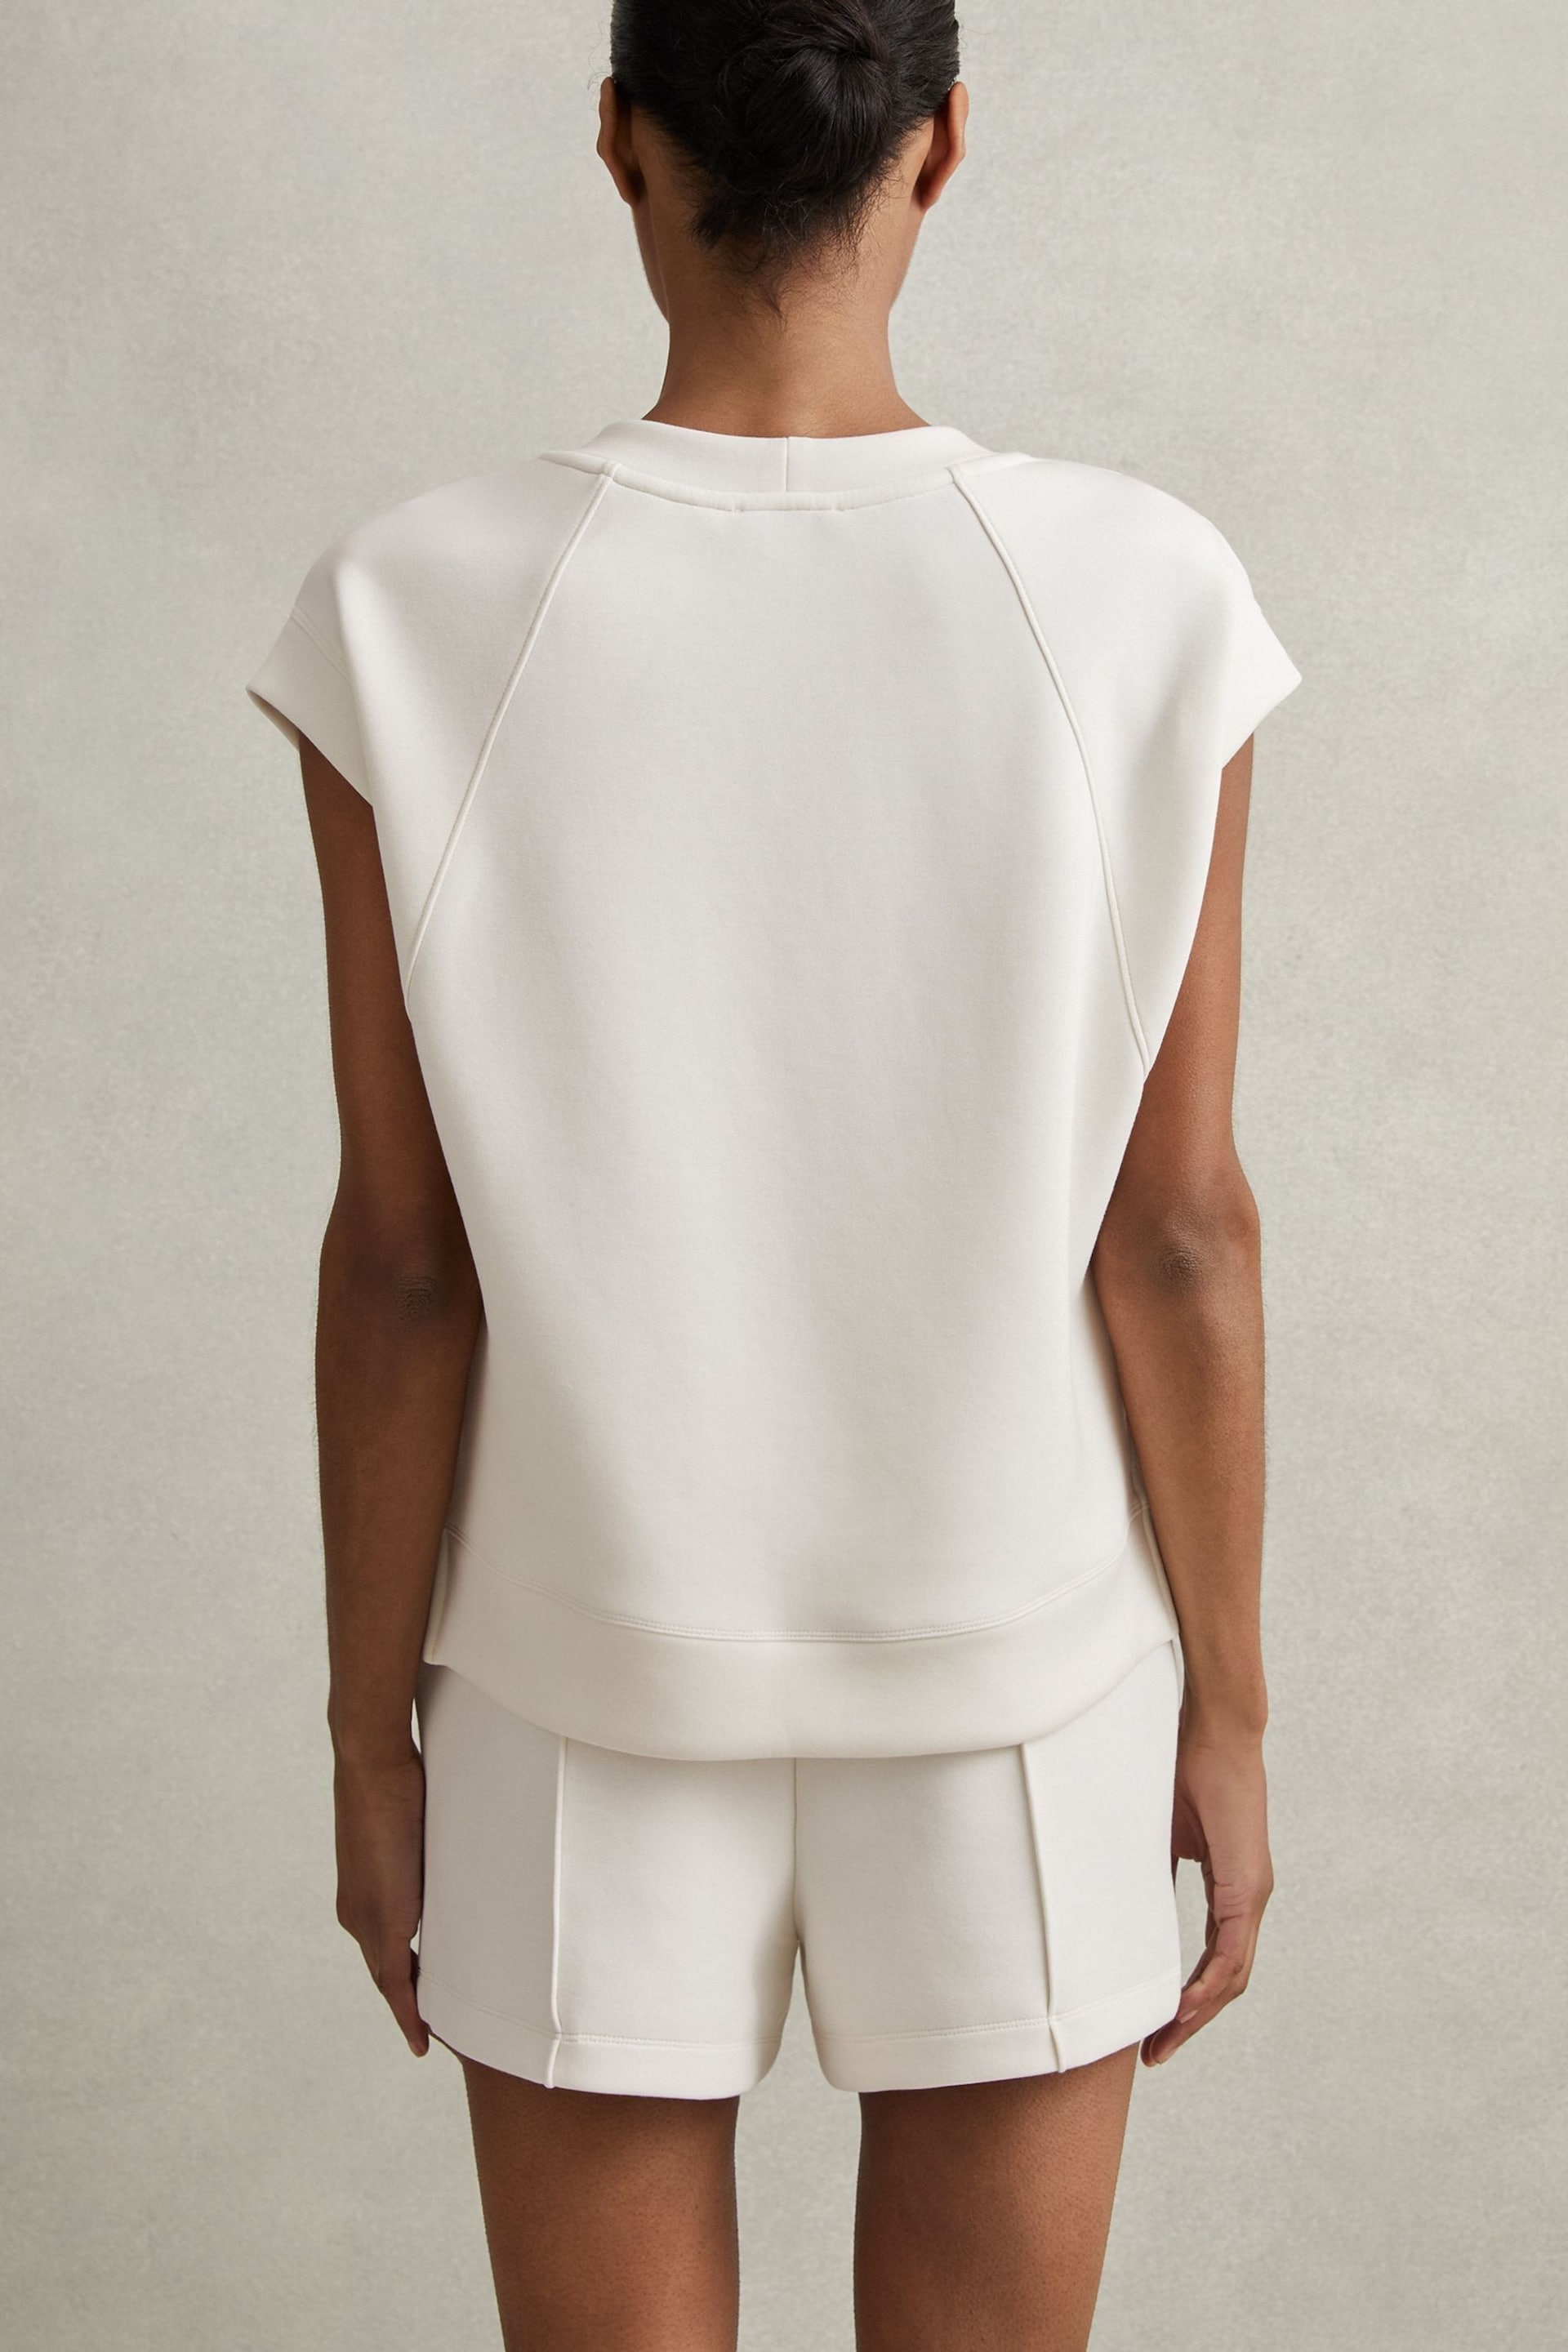 Reiss Ivory Joanna Modal Blend Co-Ord Sweatshirt - Image 4 of 7